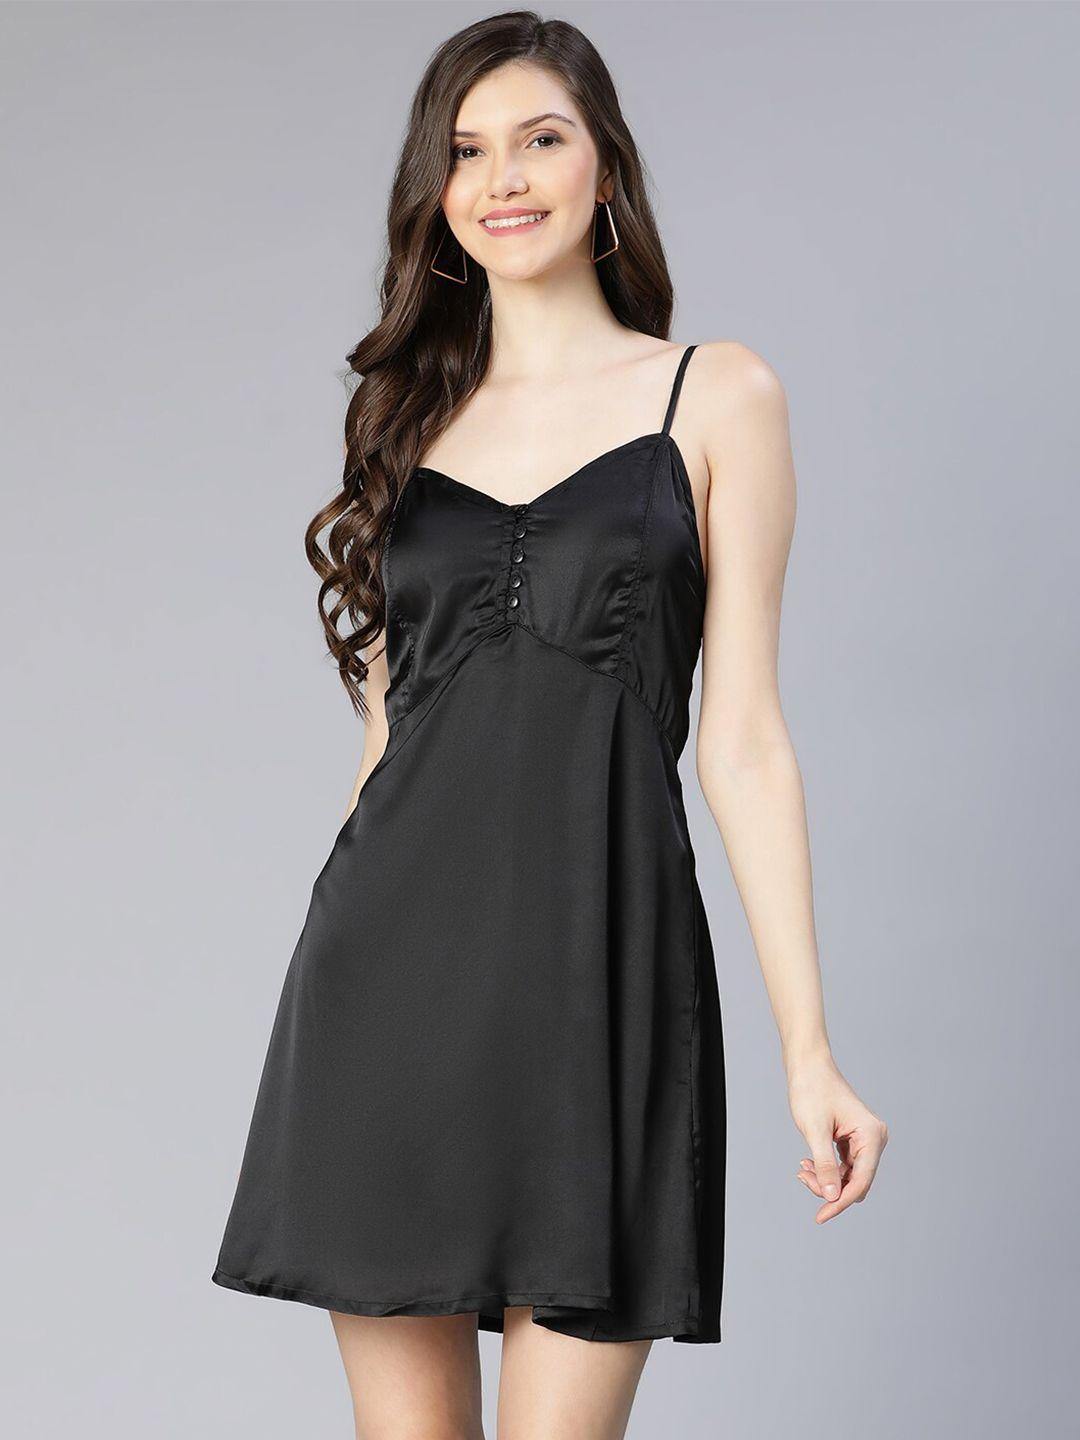 oxolloxo black solid satin mini dress